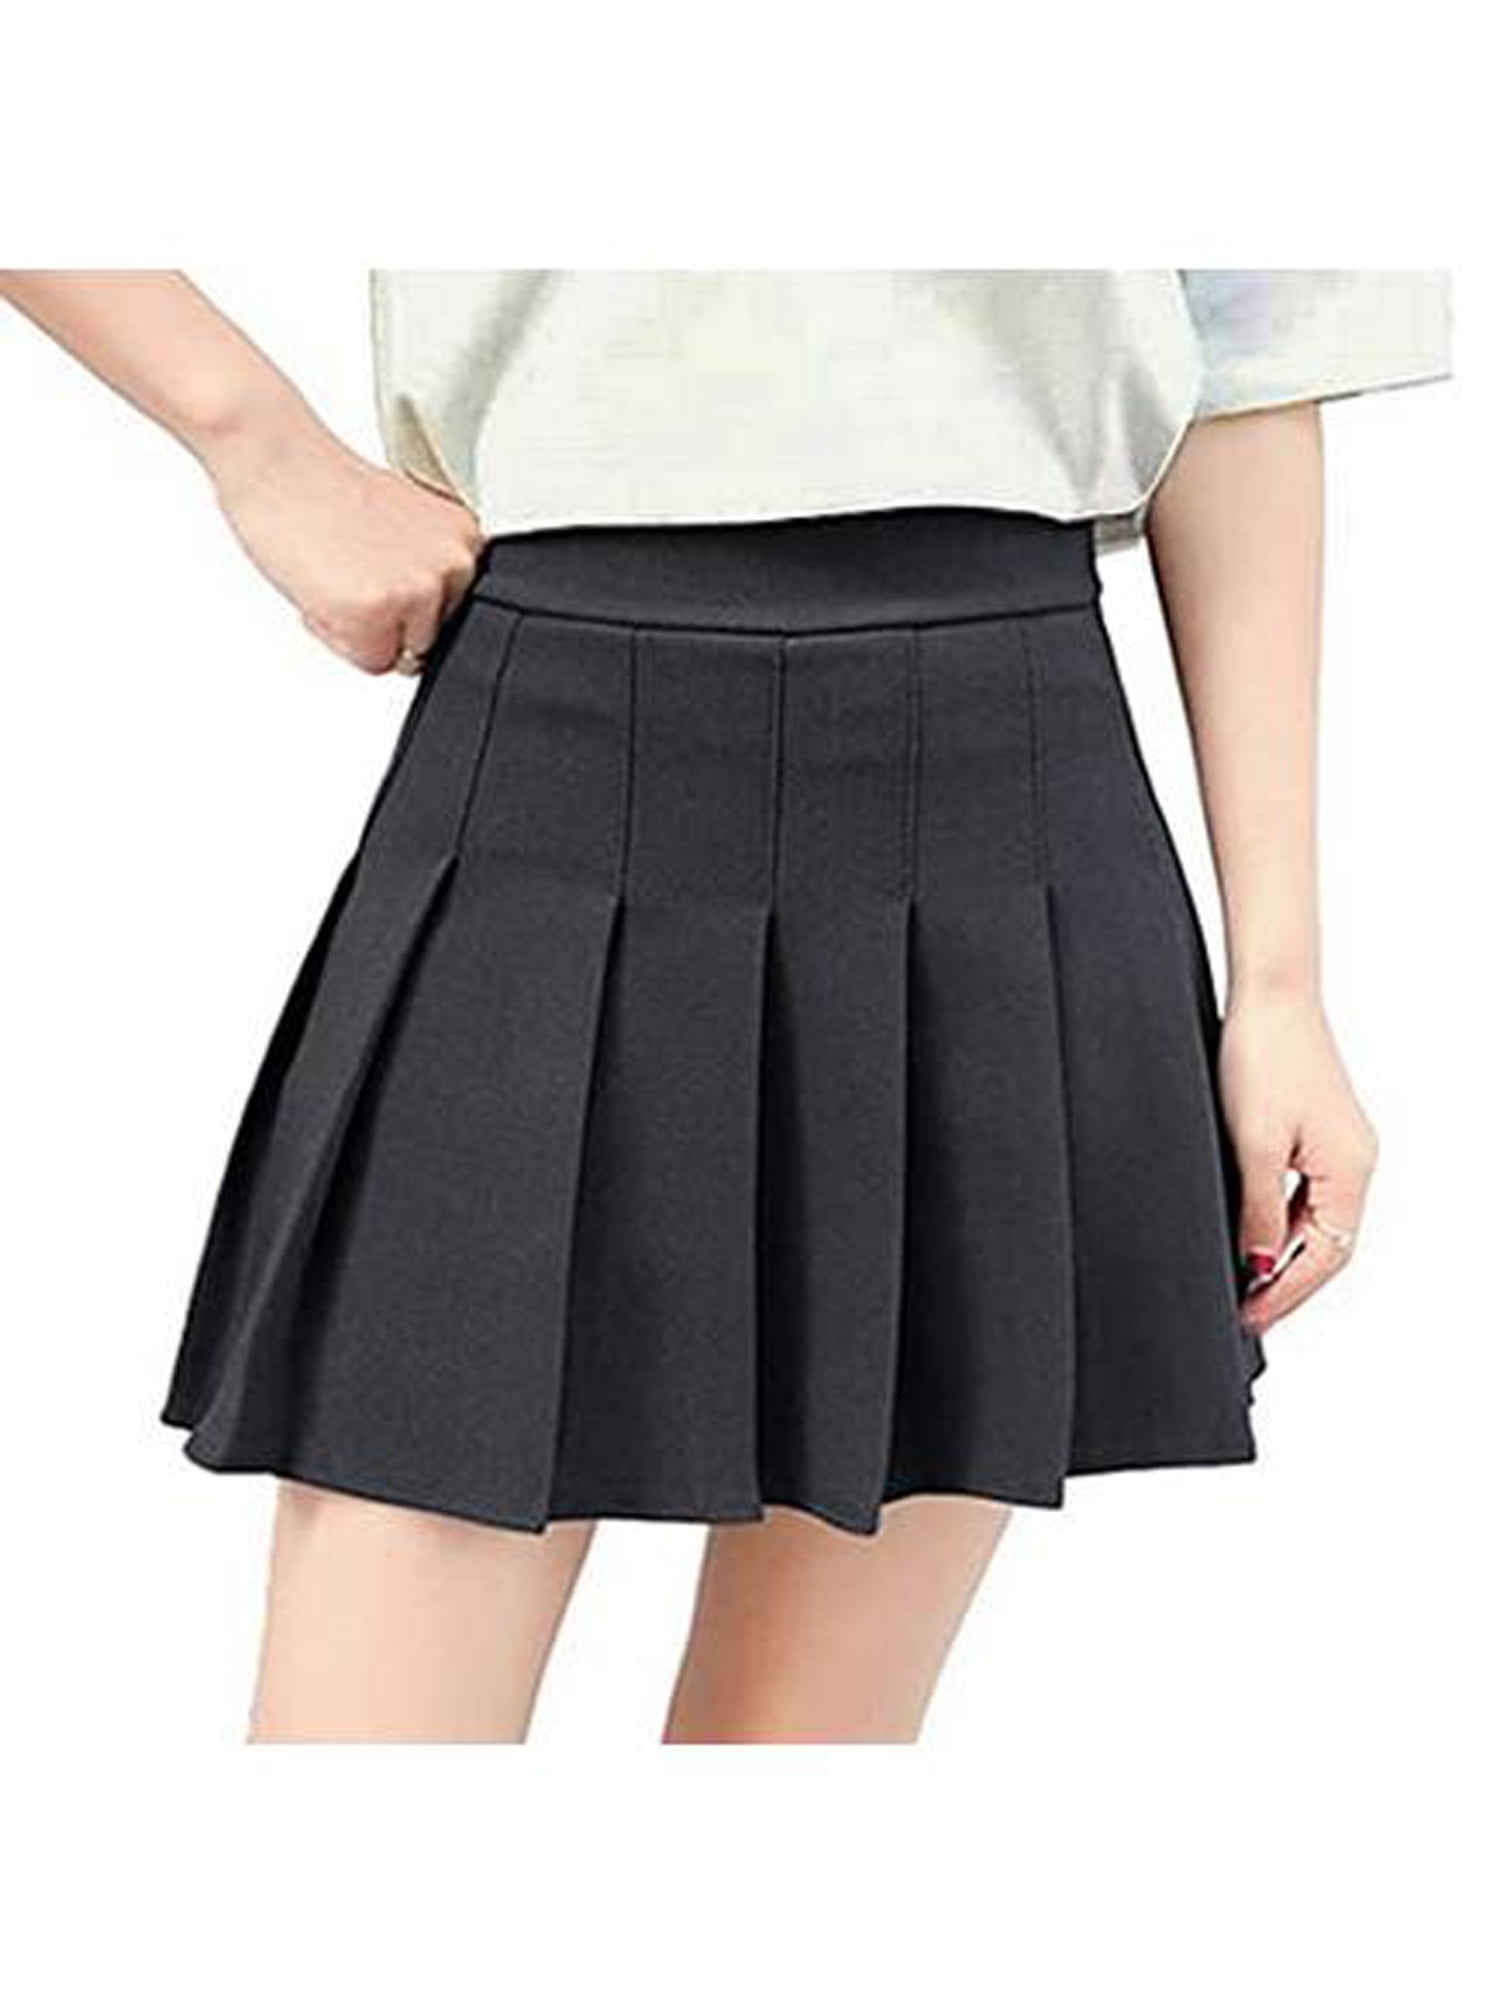 Tremour Women High Waist Pleated Mini Tennis Skirt Solid Short Skirts